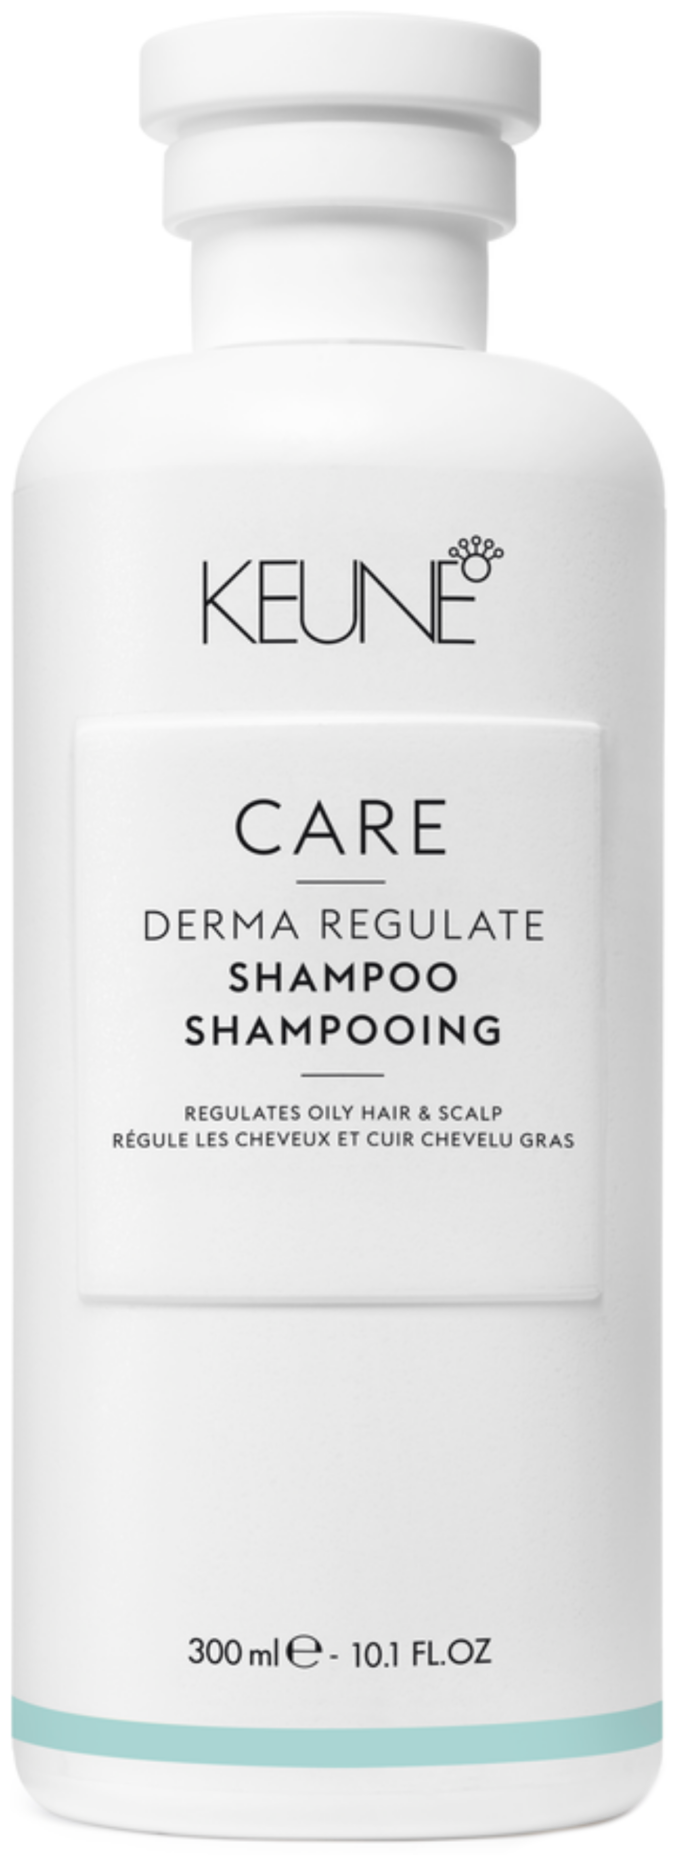 Keune шампунь для волос Care Derma Regulate, 300 мл